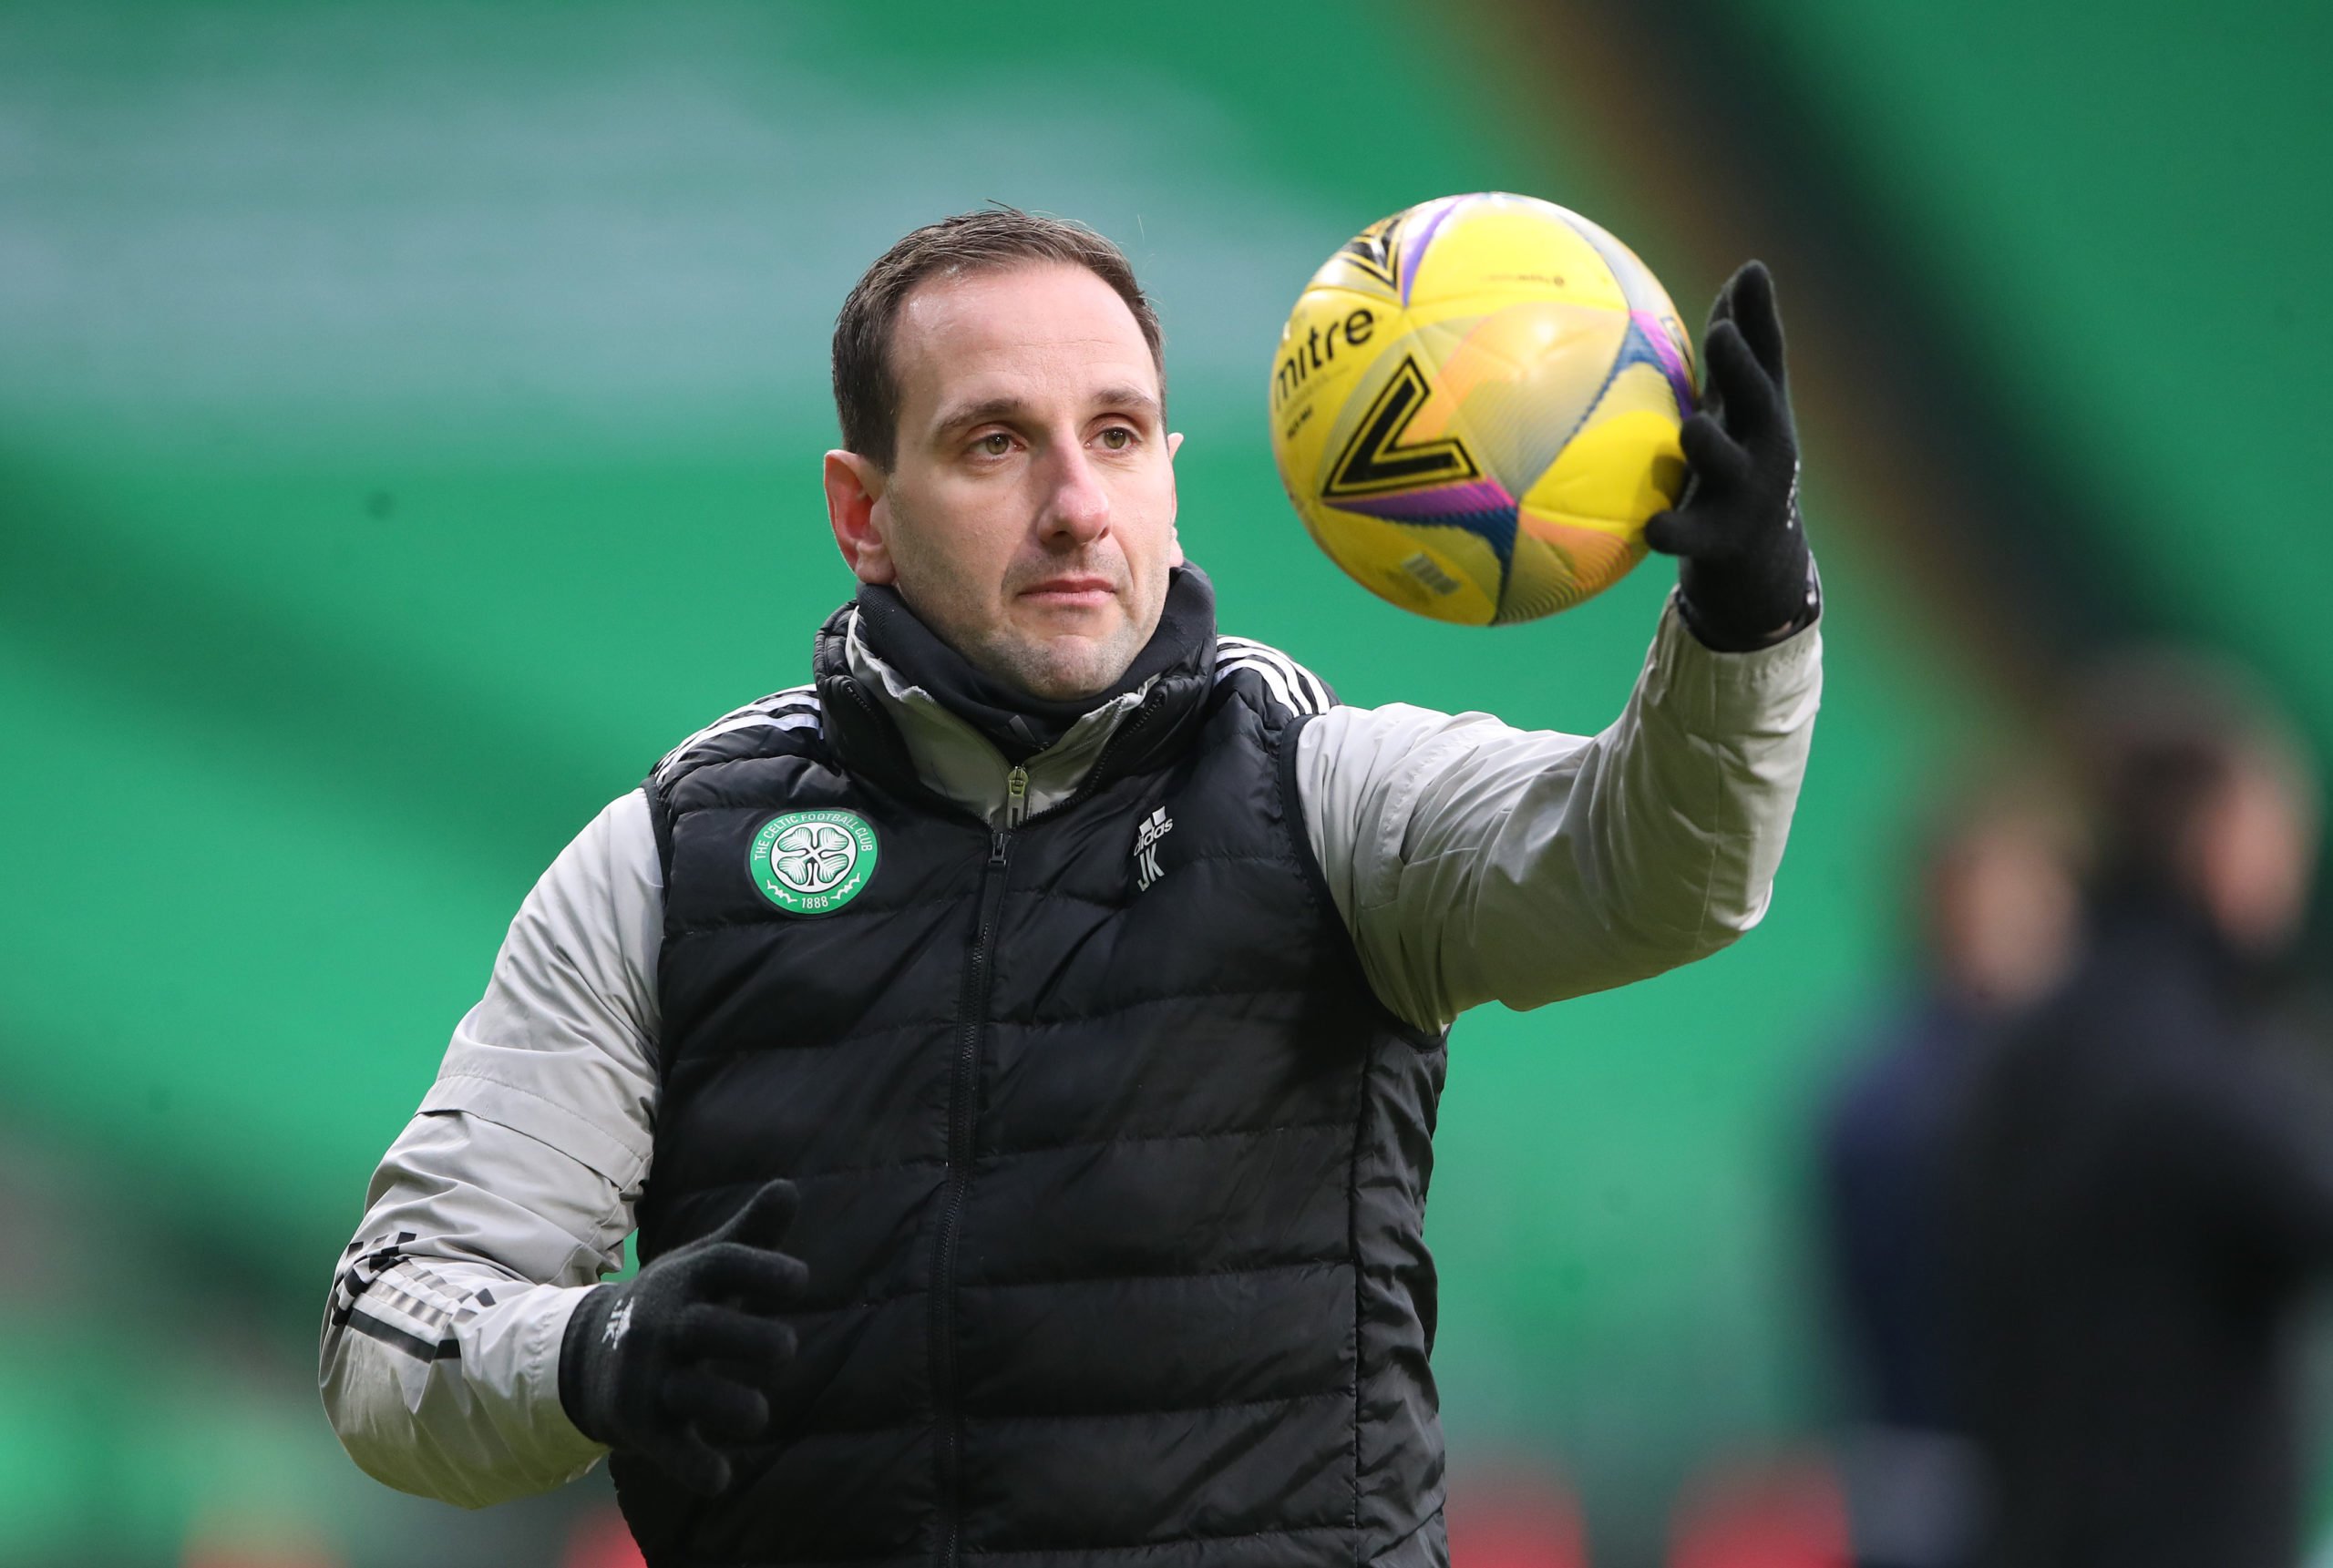 Celtic interim boss John Kennedy's "best team in the country" remark has been misunderstood